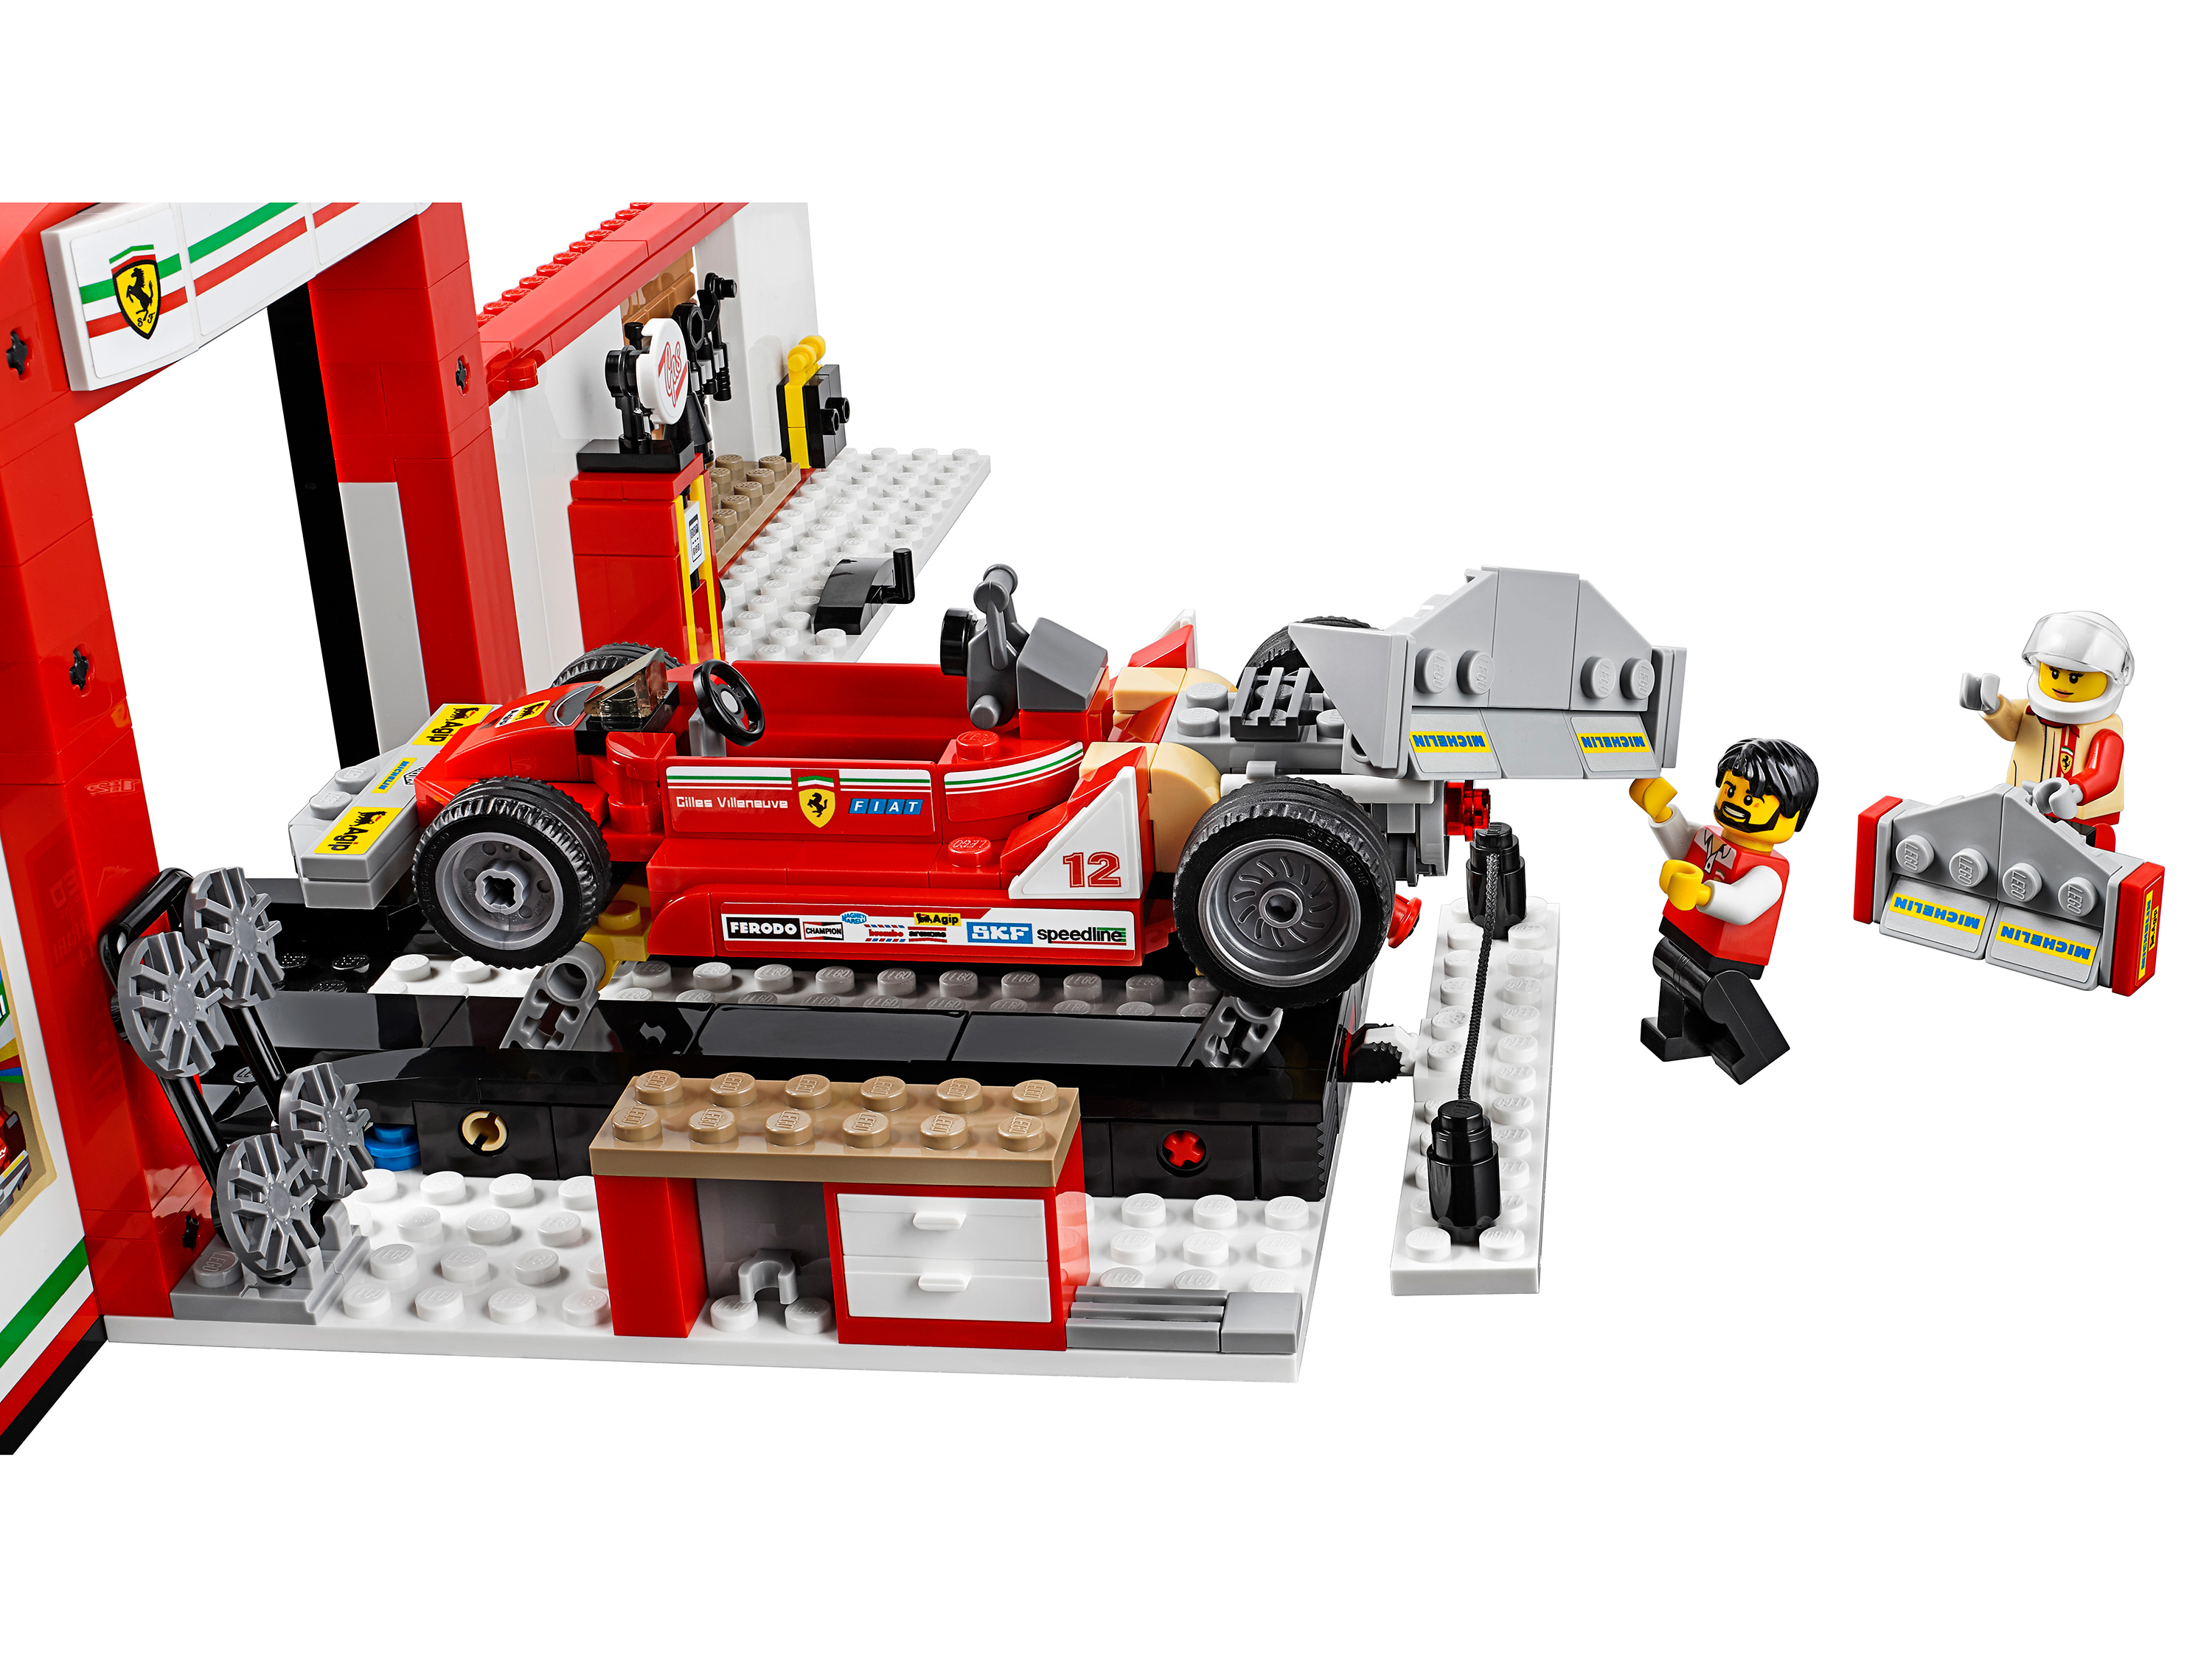 Lego Speed Champions 75889 Гараж Ferrari